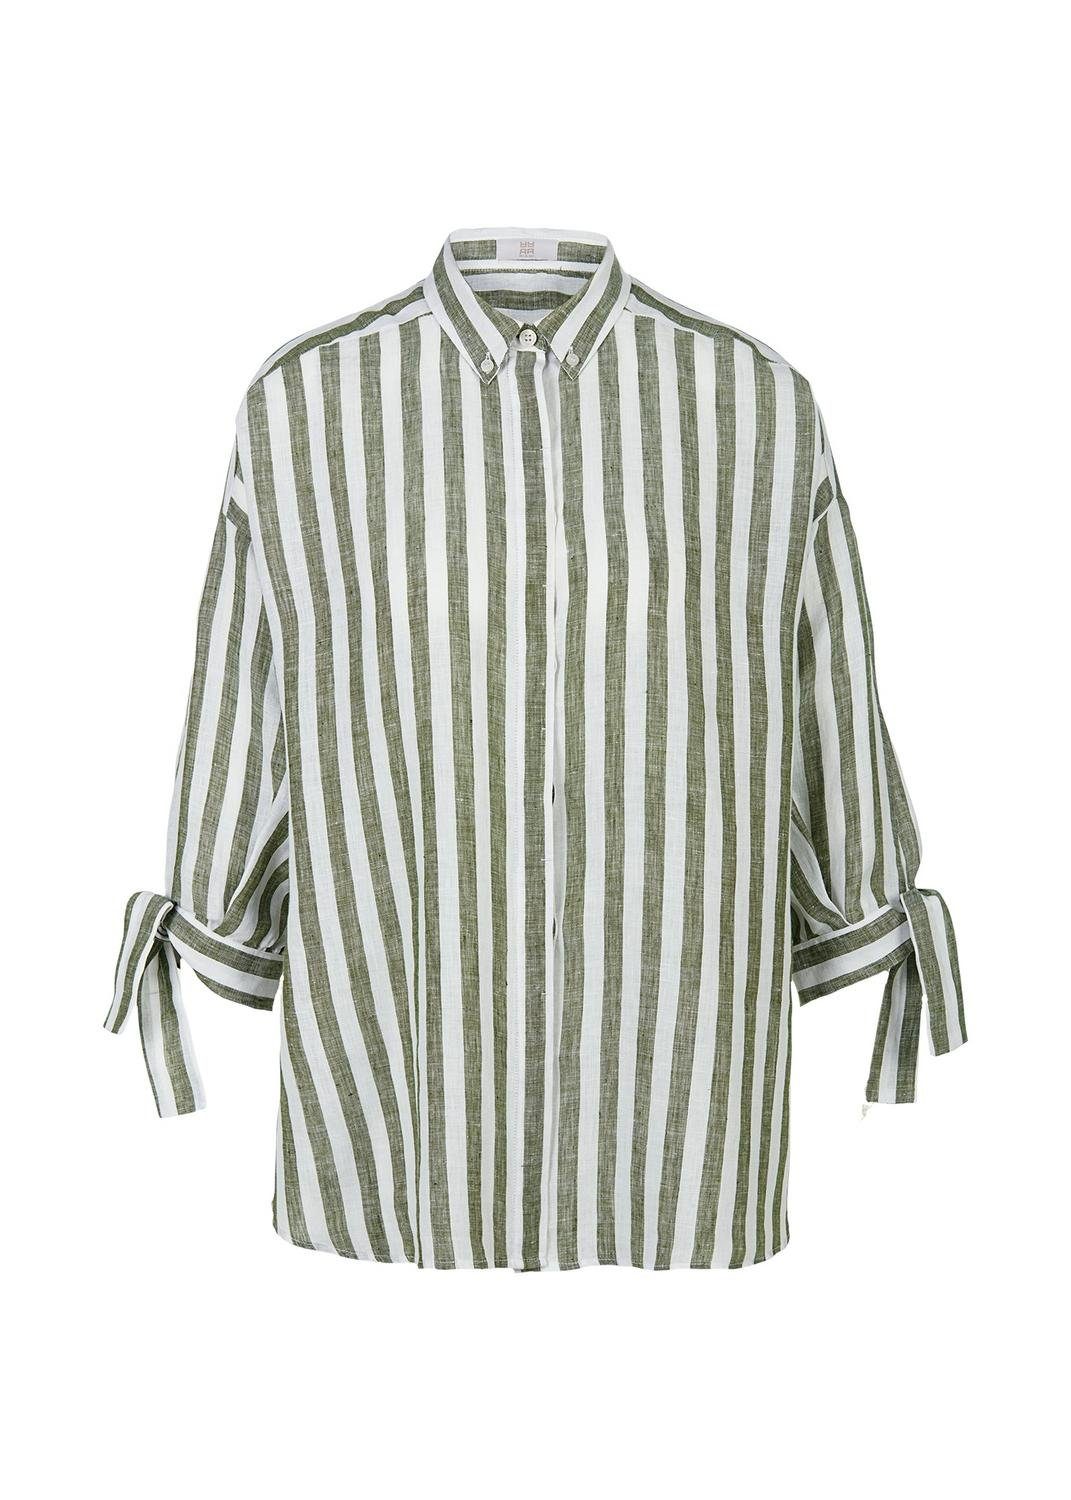 Riani Blusenshirt Bluse, olive patterned